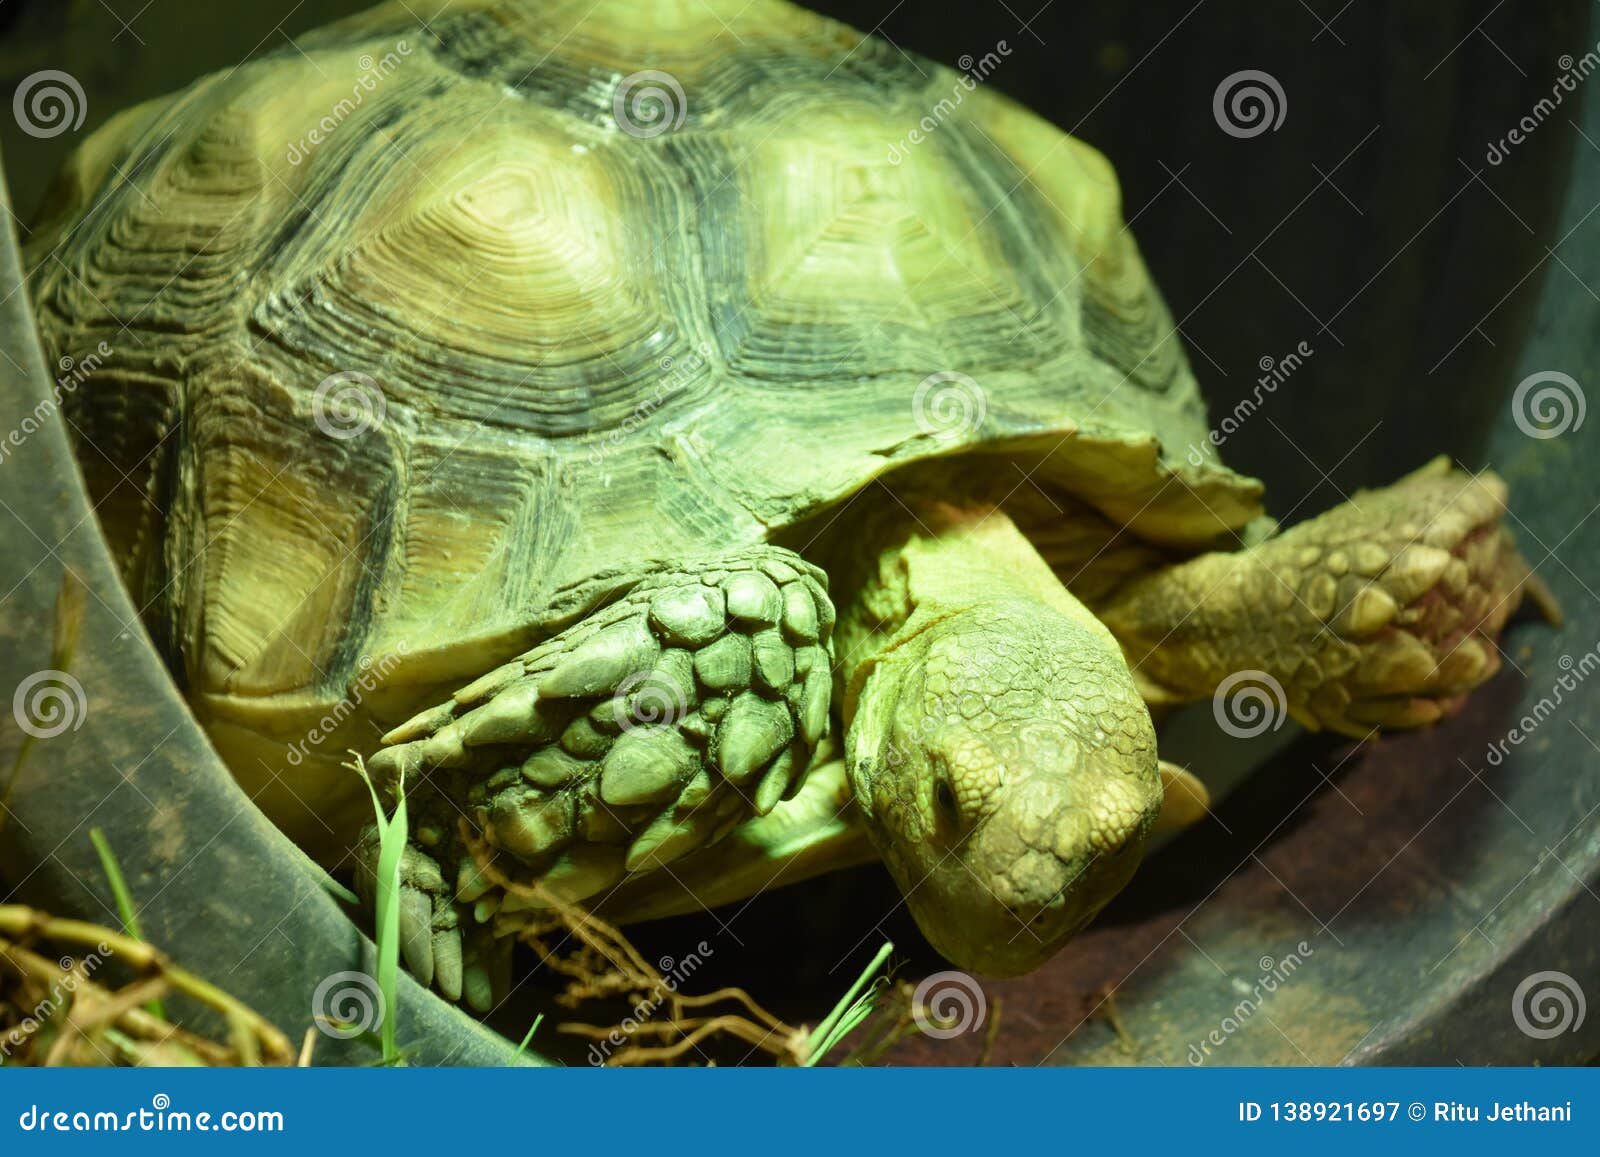 A Green Tortoise stock image. Image of fauna, huge, leaf - 138921697